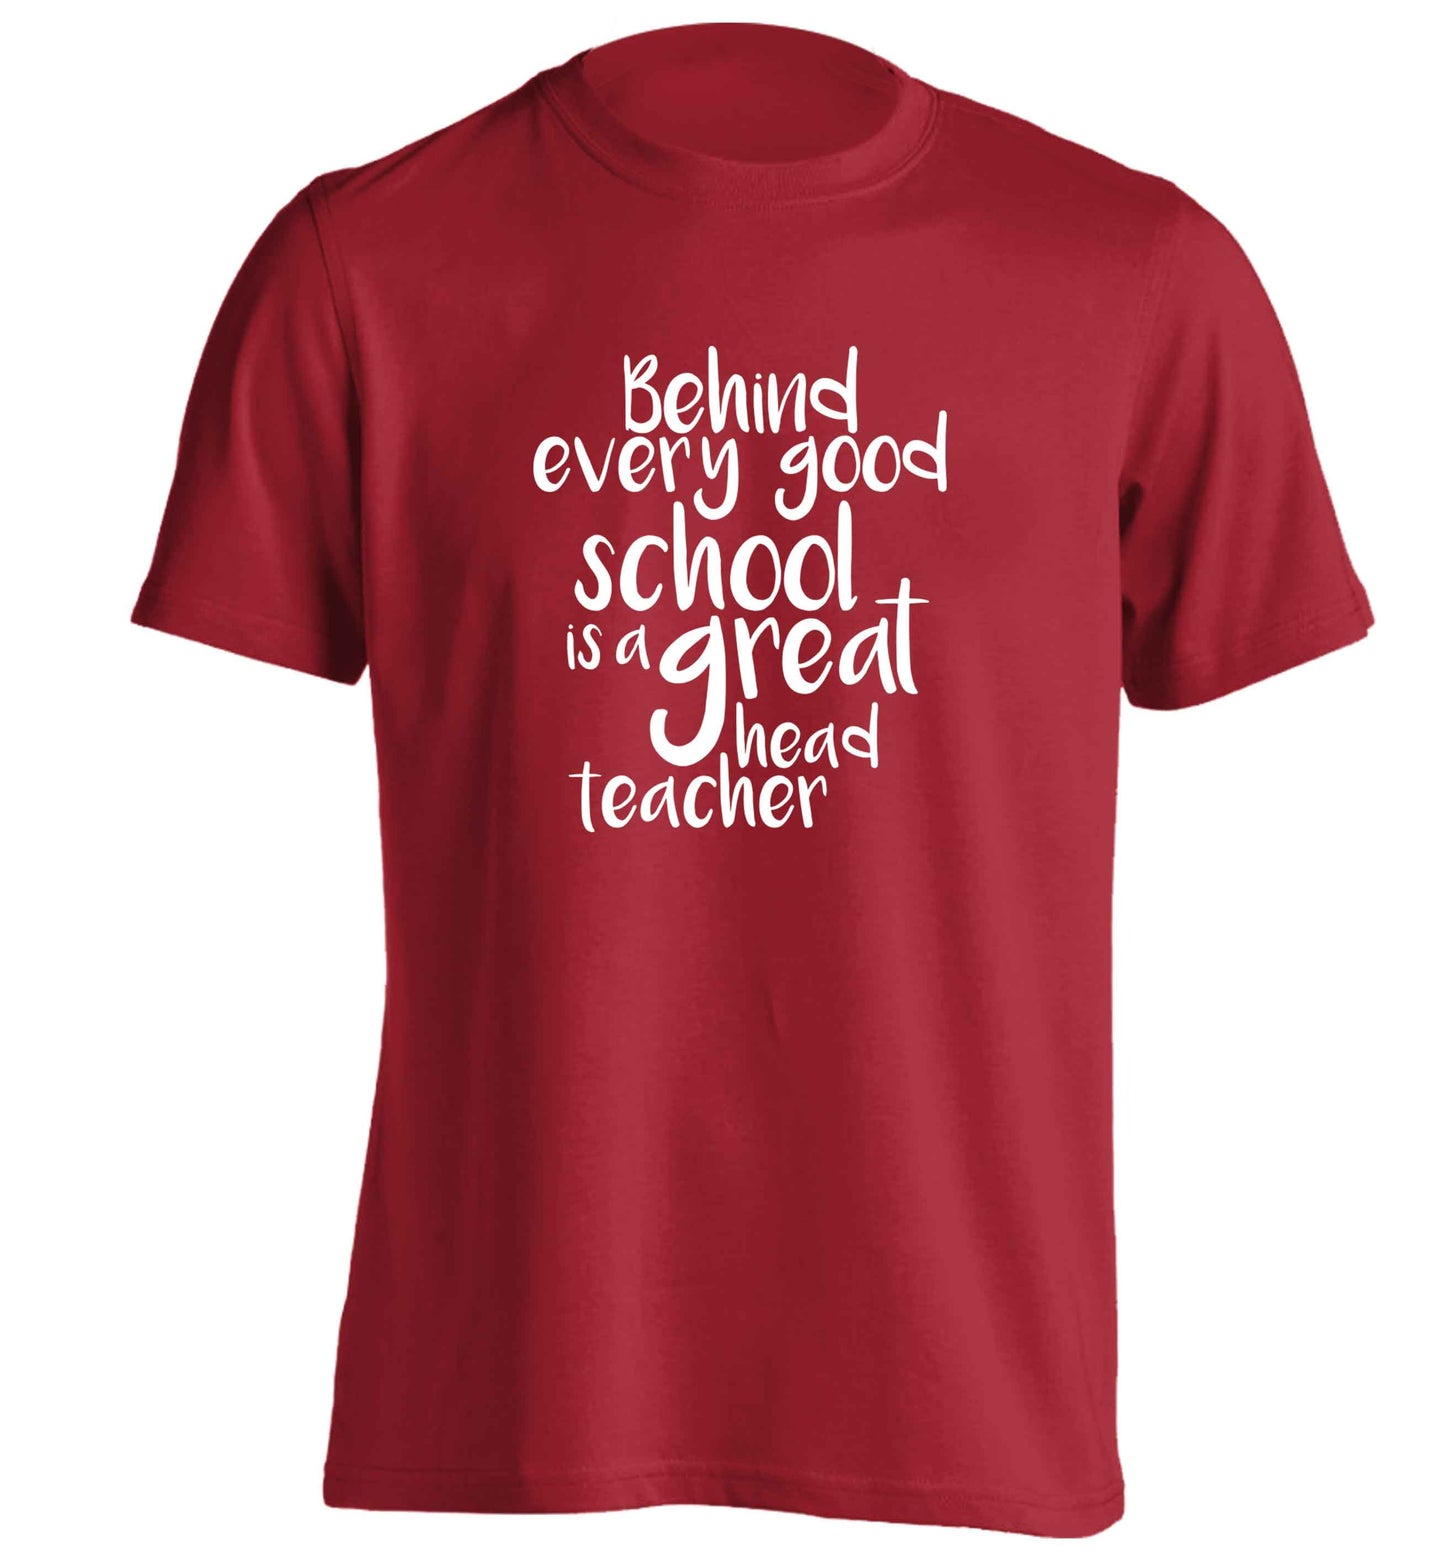 Behind every good school is a great head teacher adults unisex red Tshirt 2XL